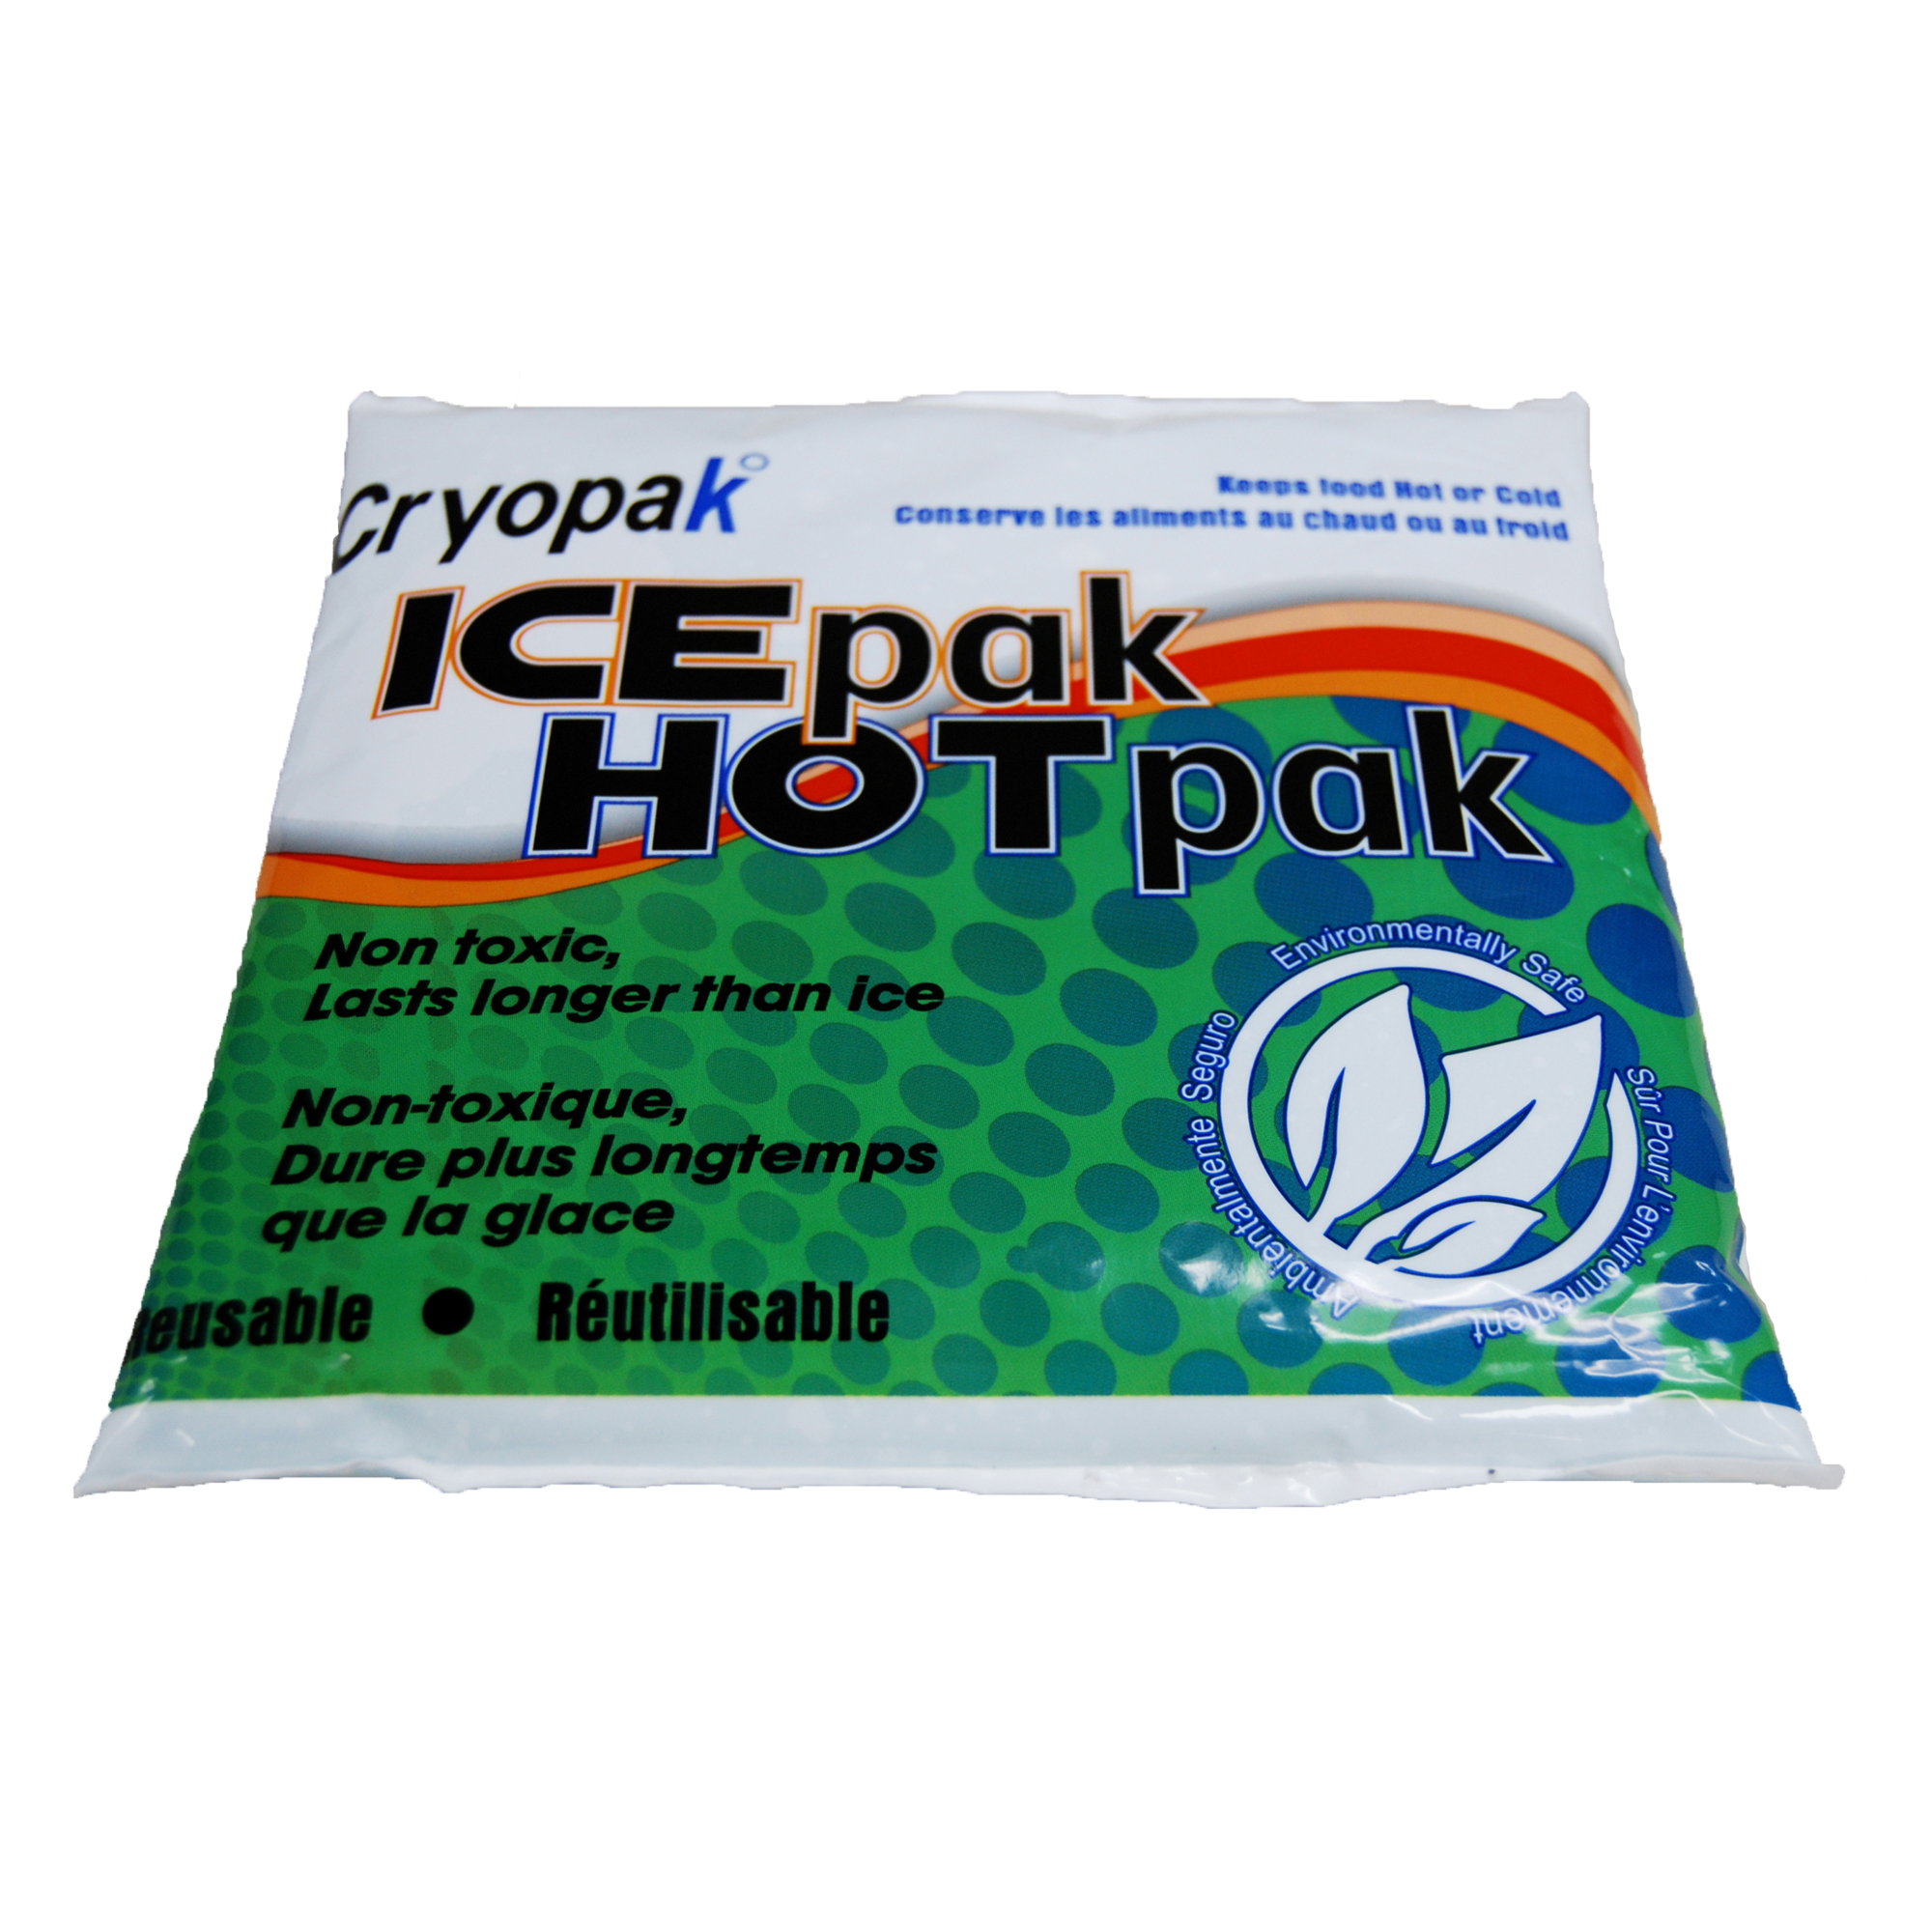 ICE-PAK/HOT-PAK